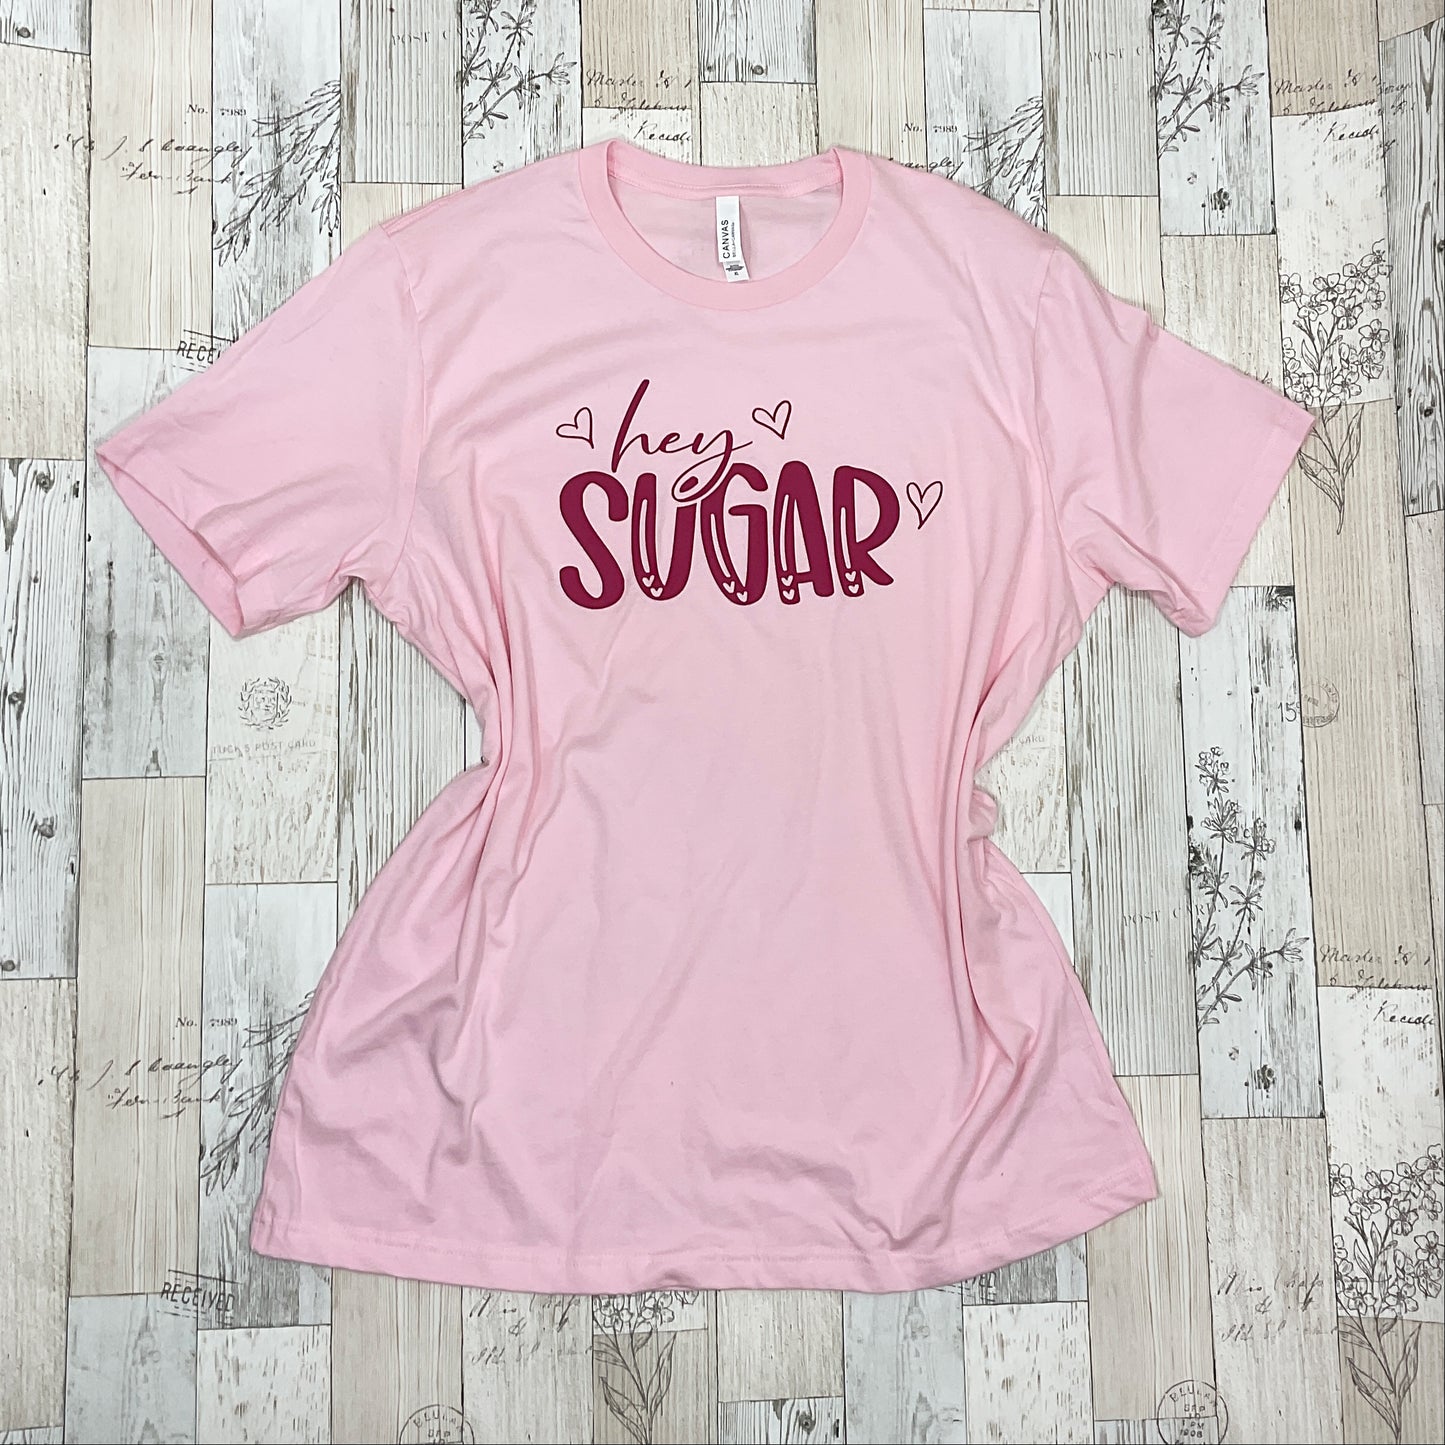 Hey Sugar Graphic Tee - Sassy Chick Clothing